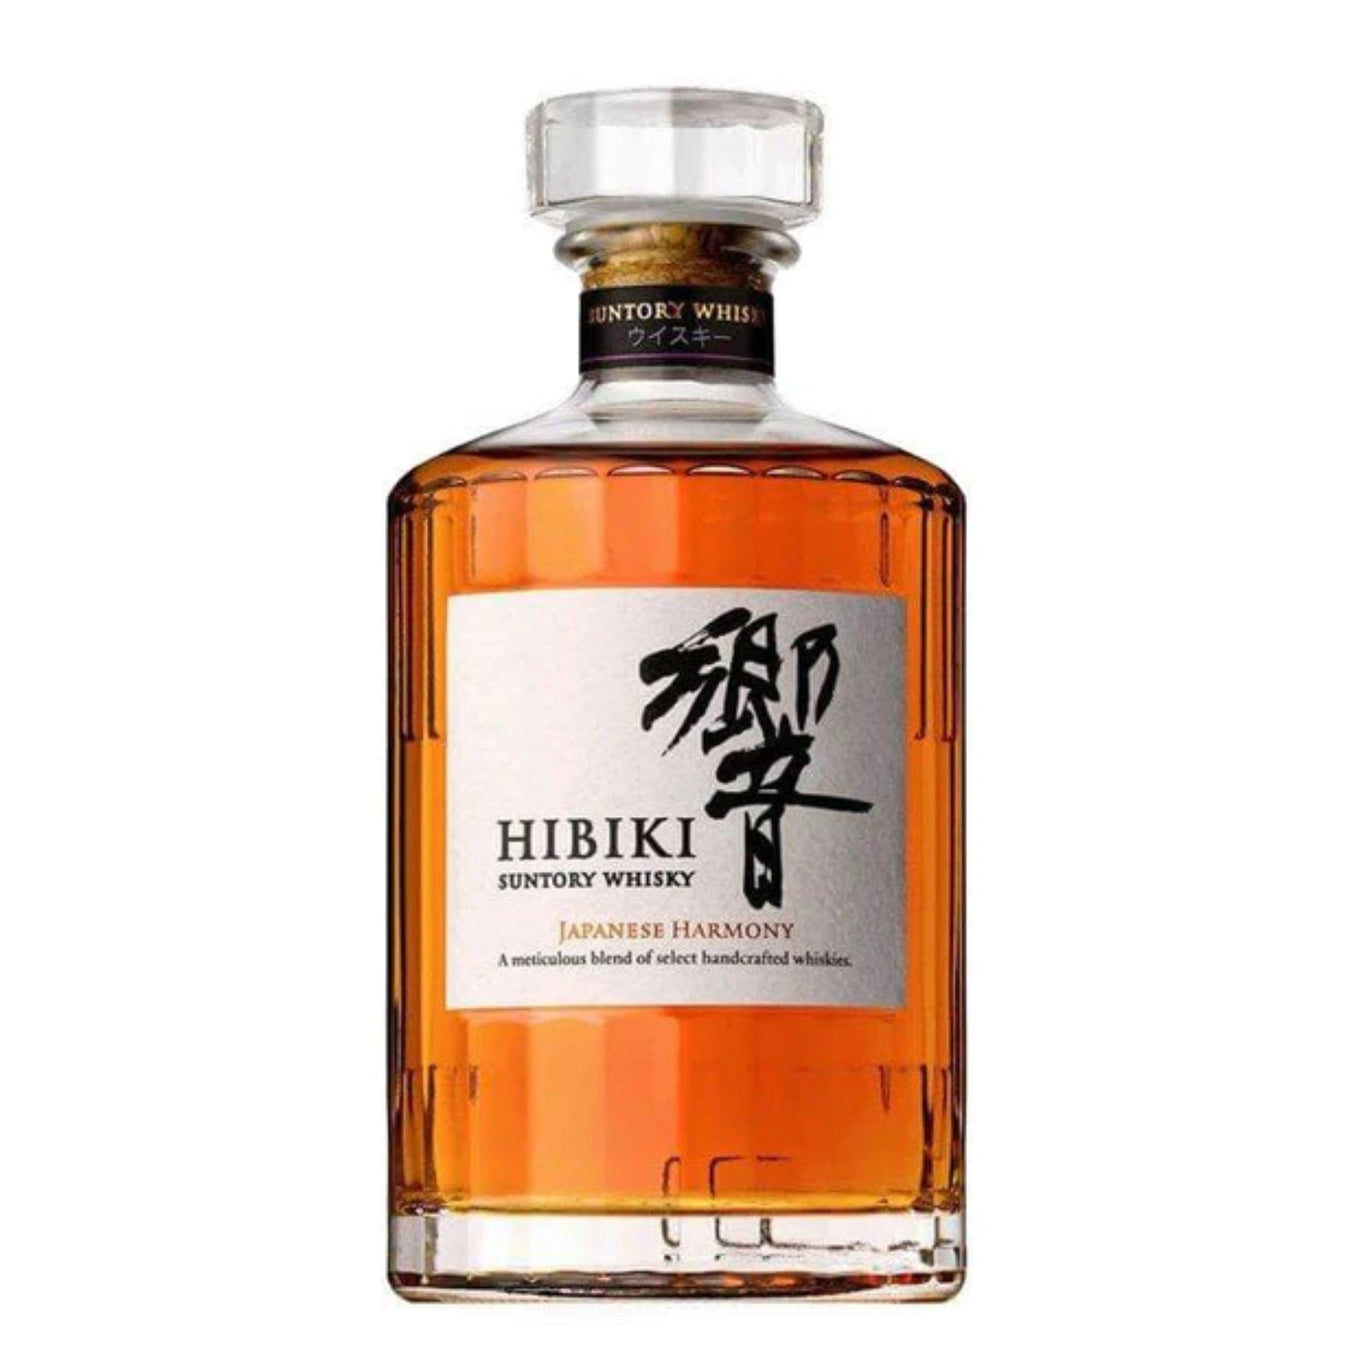 Hibiki Suntory Whisky Japanese Harmony 750ml